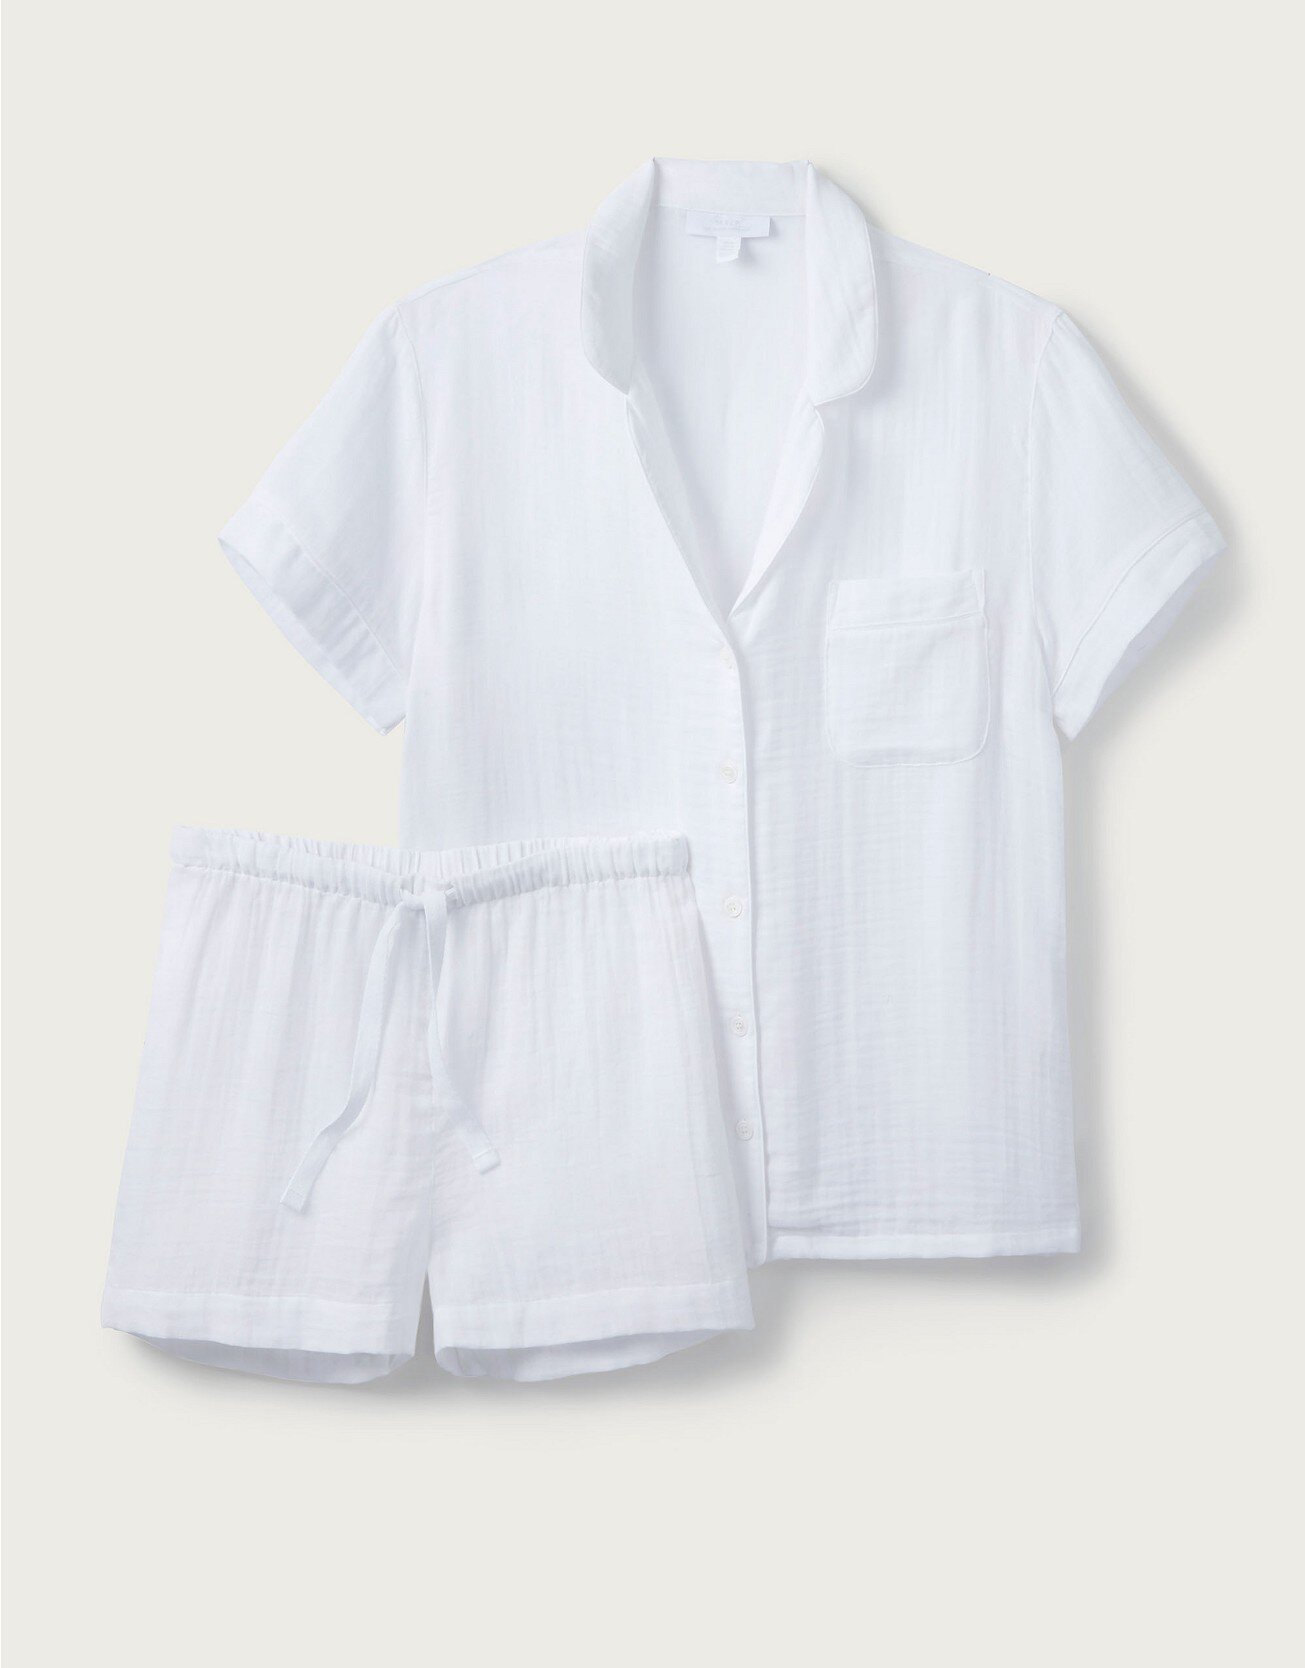 The White Company Double-Cotton Short Pyjama Set, £65